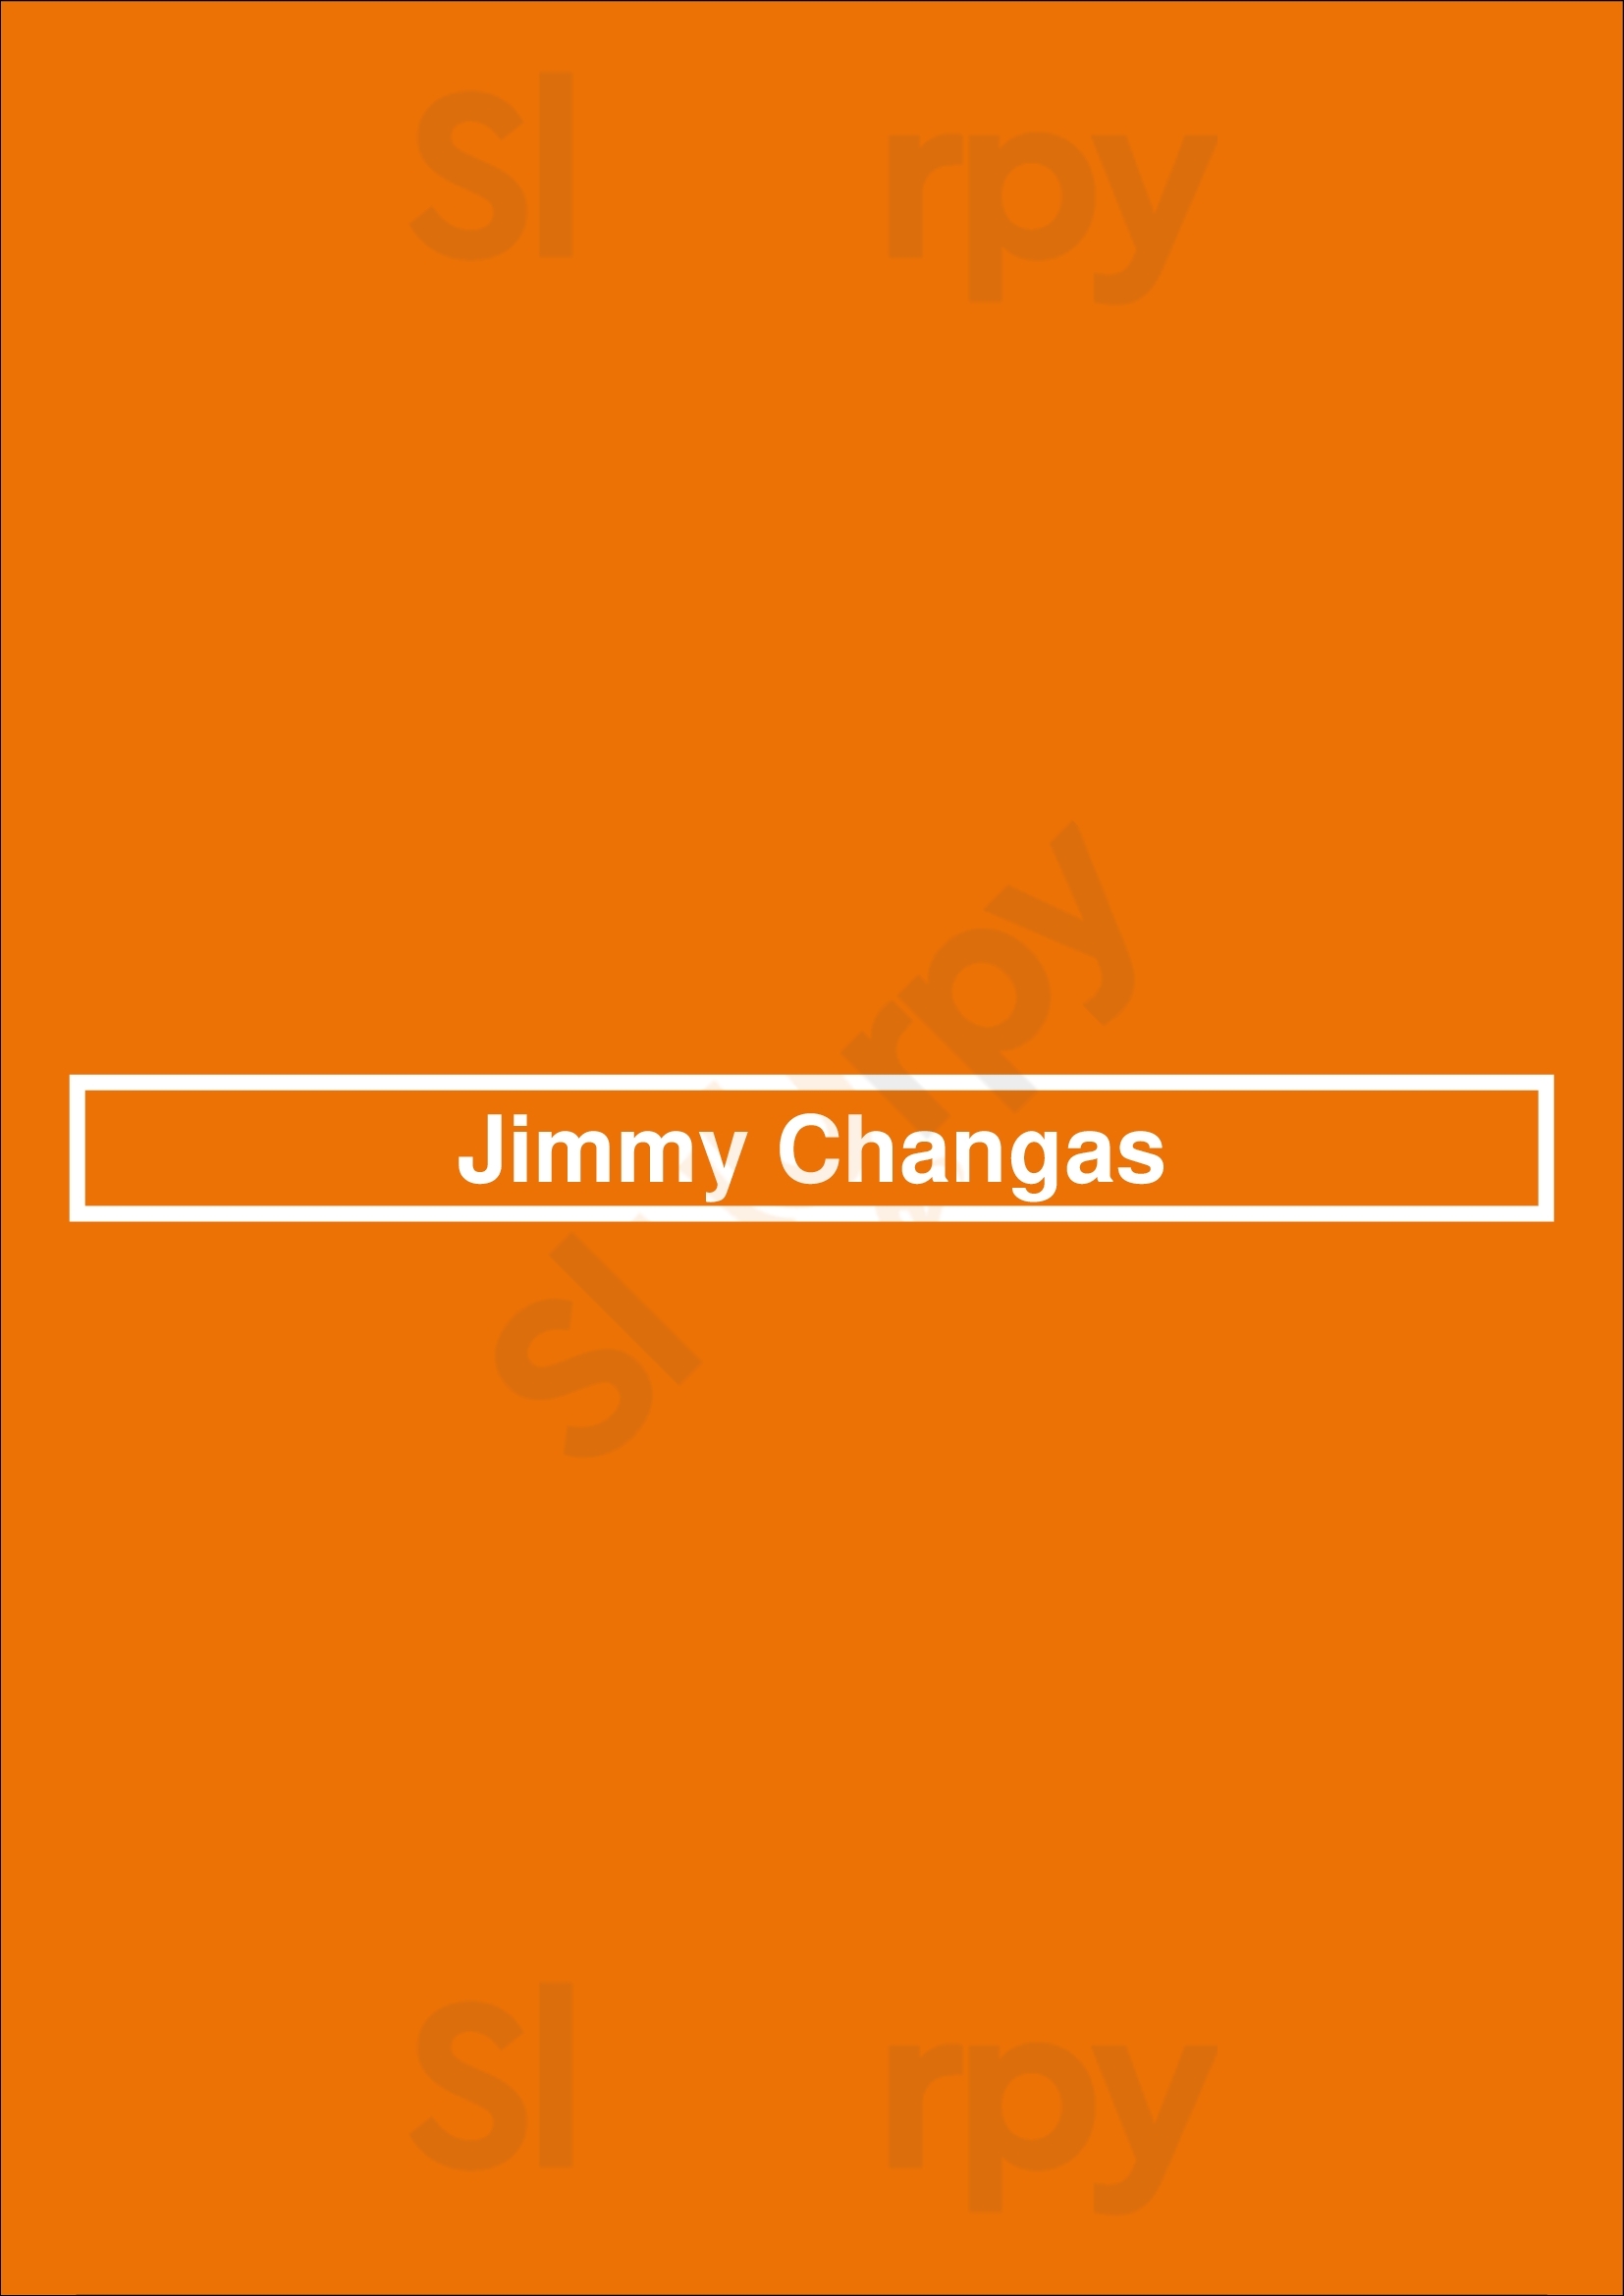 Jimmy Changas Pasadena Menu - 1